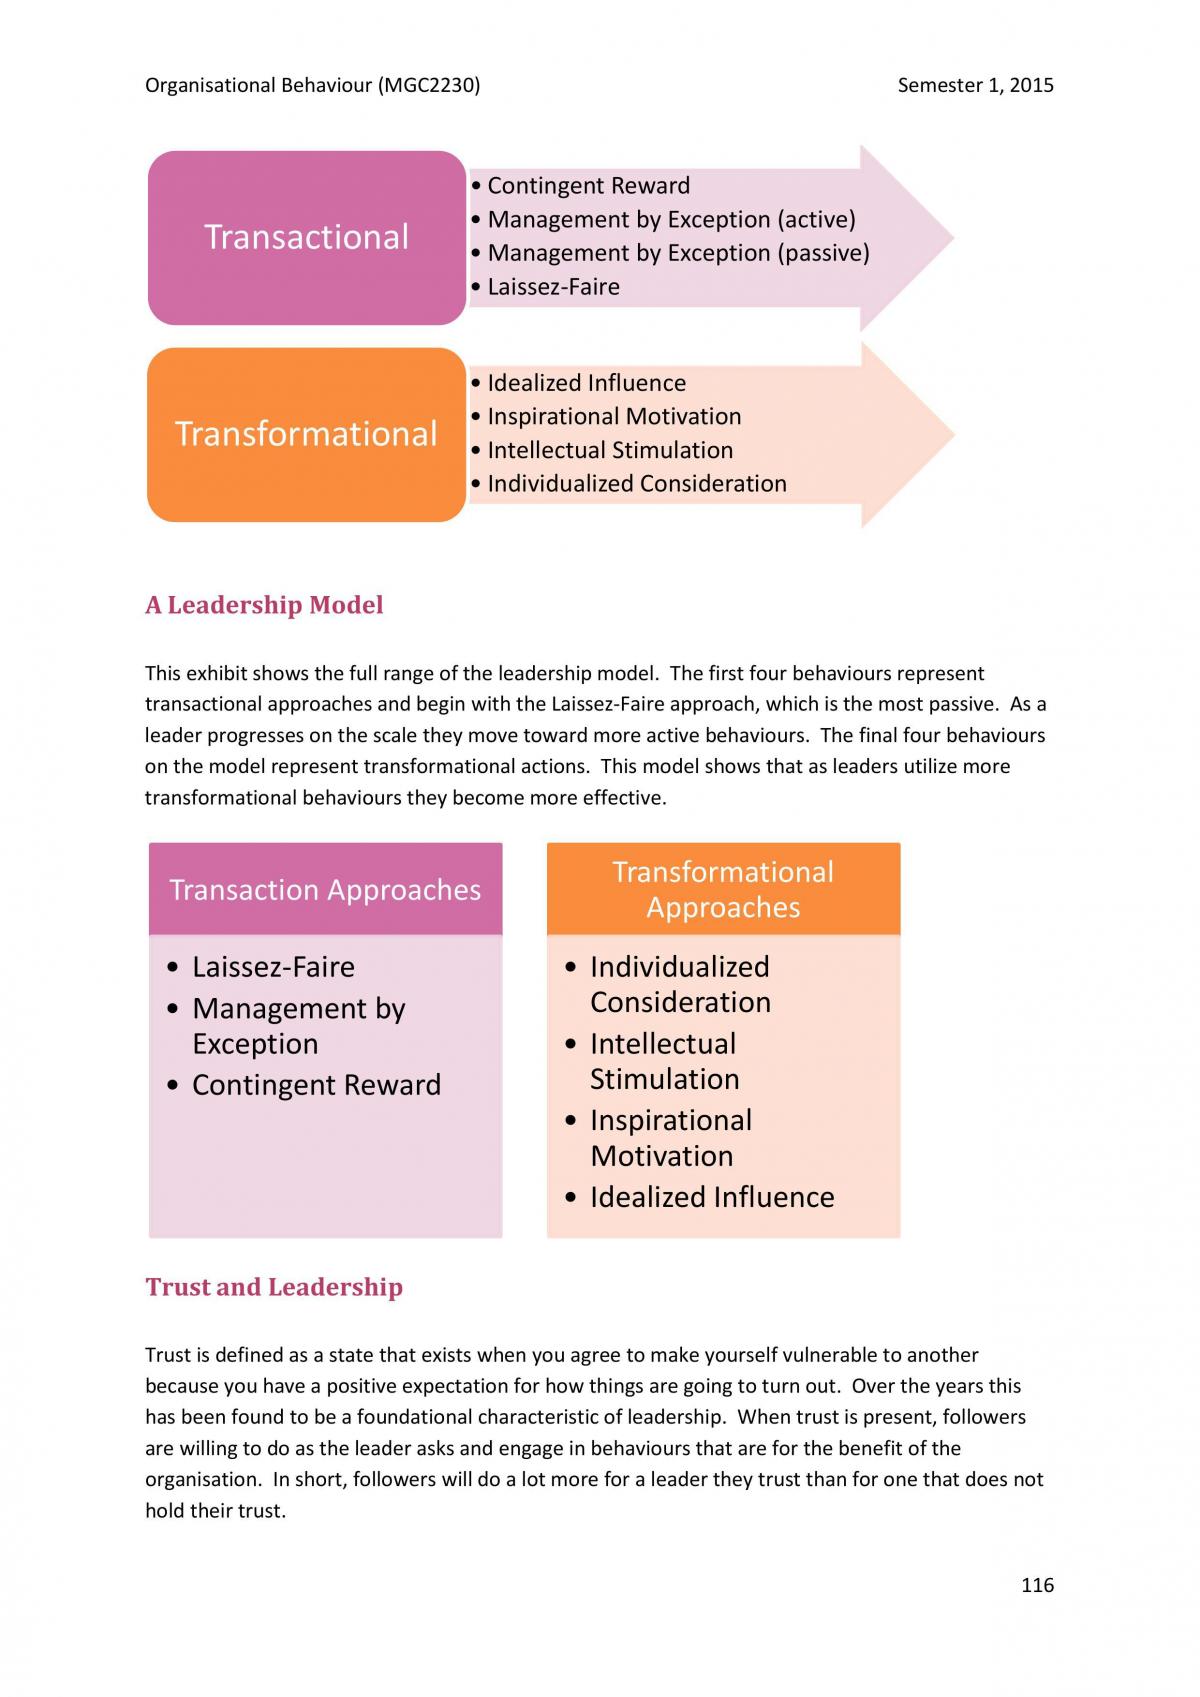 MGC2230 Organisational Behaviour Full Study Notes - Page 117